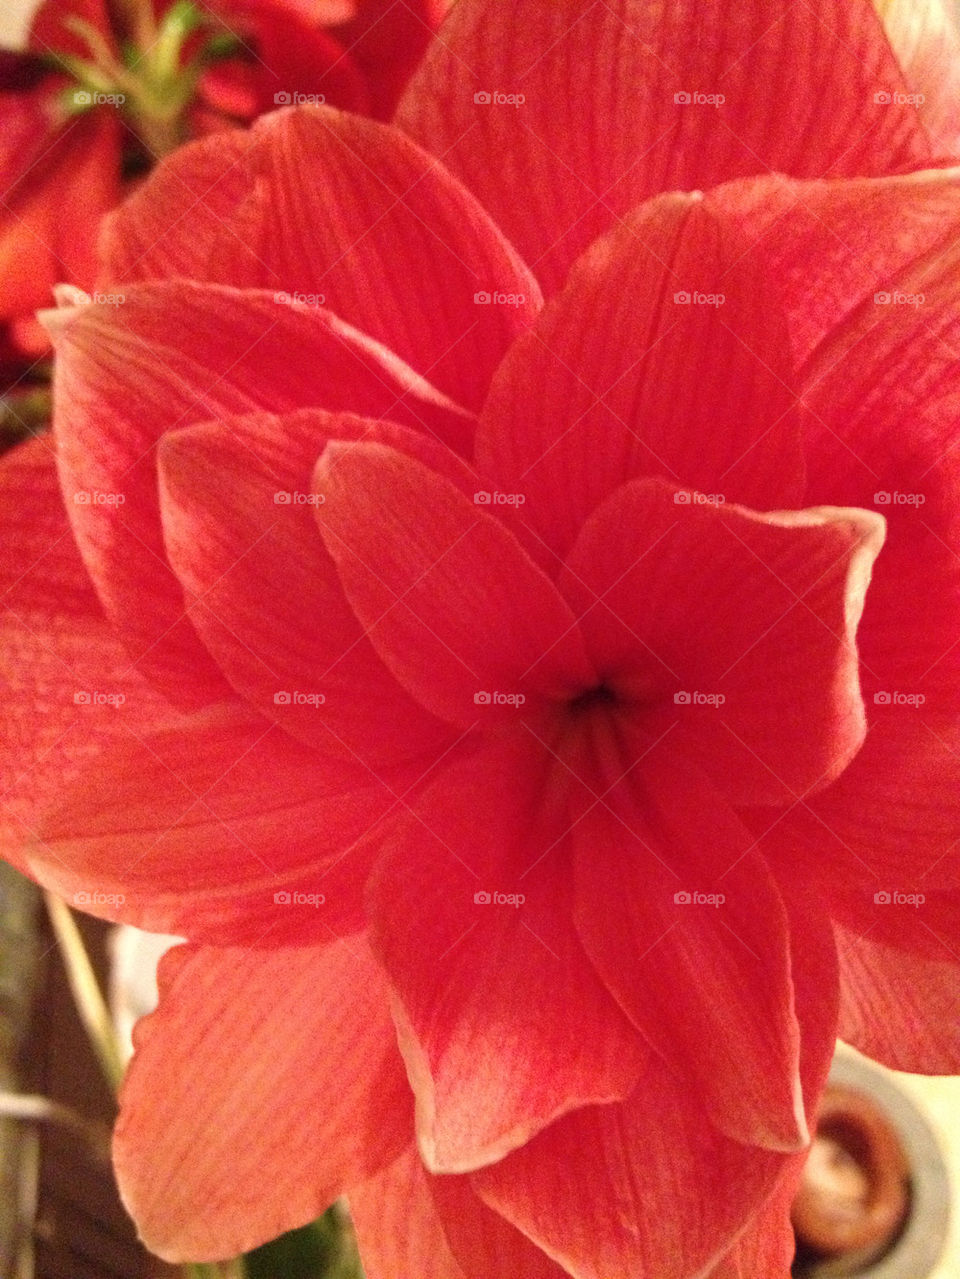 flower red amaryllis by liselott